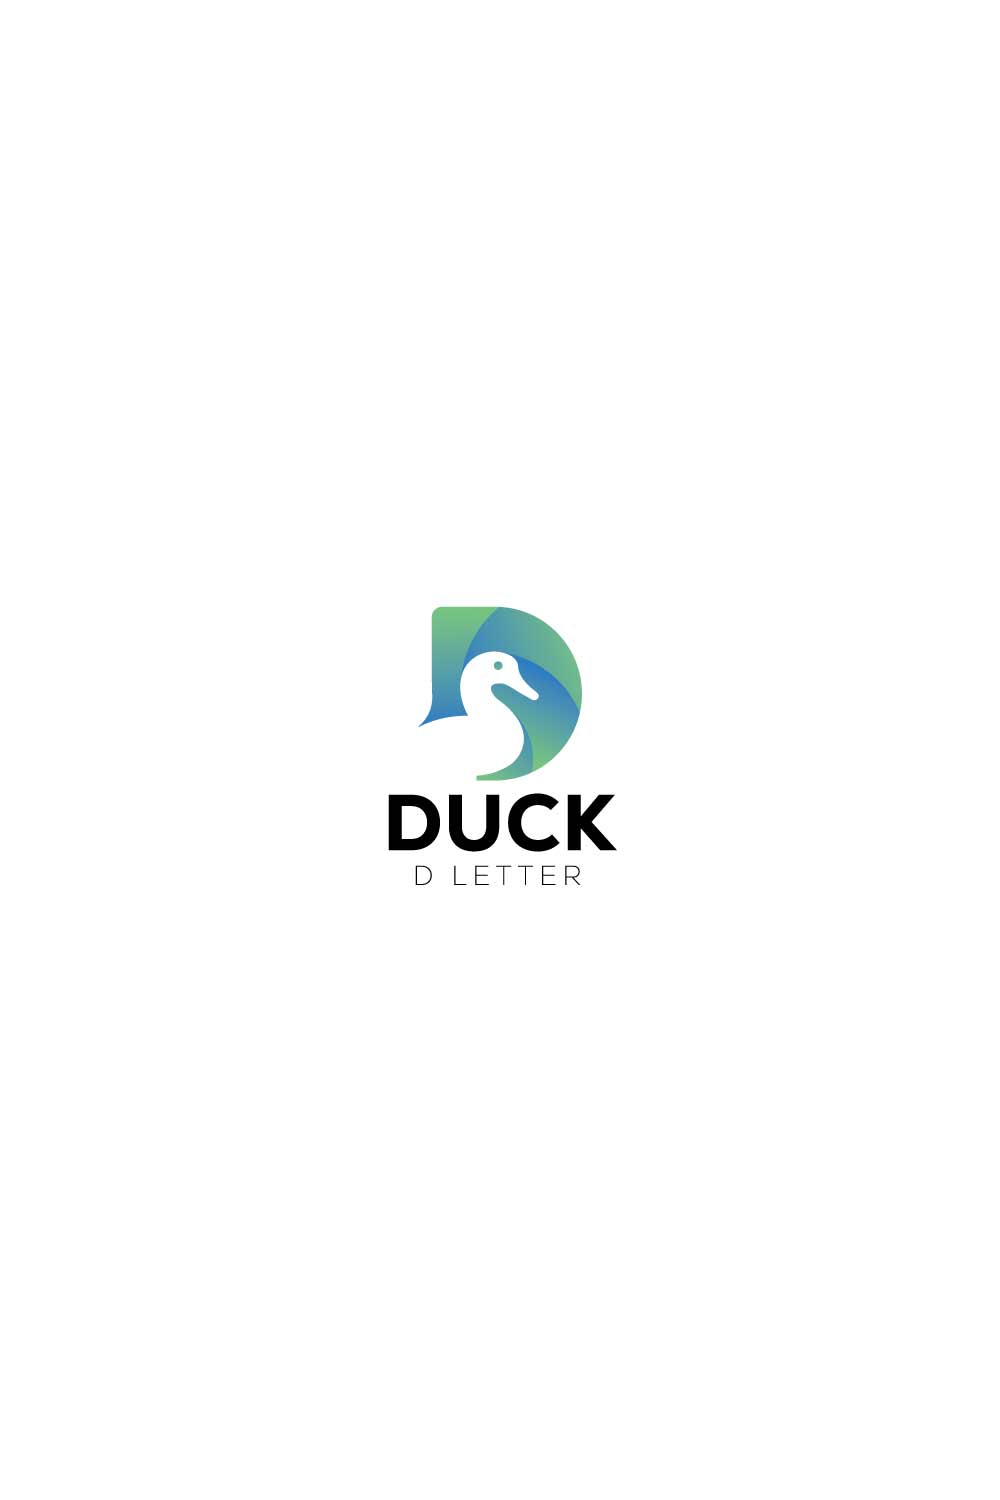 Initial letter D Duck logo design pinterest preview image.